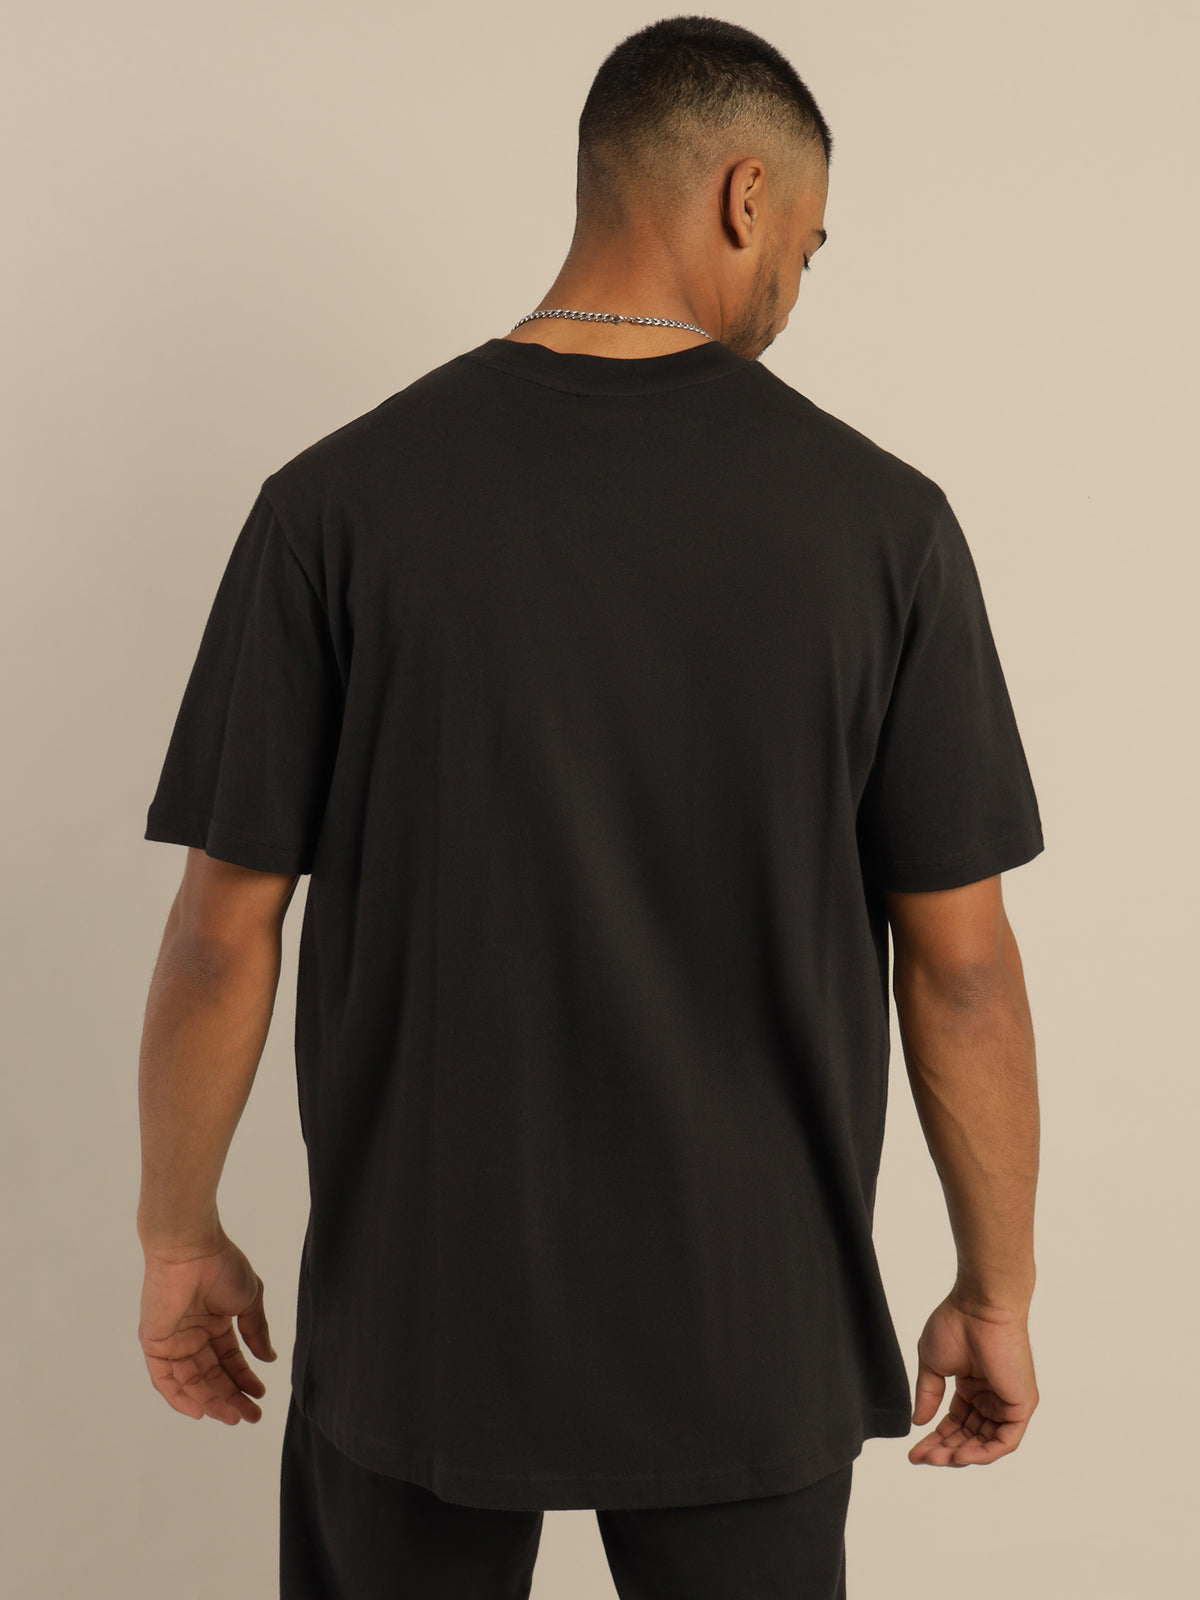 Edge Seam T-Shirt in Black